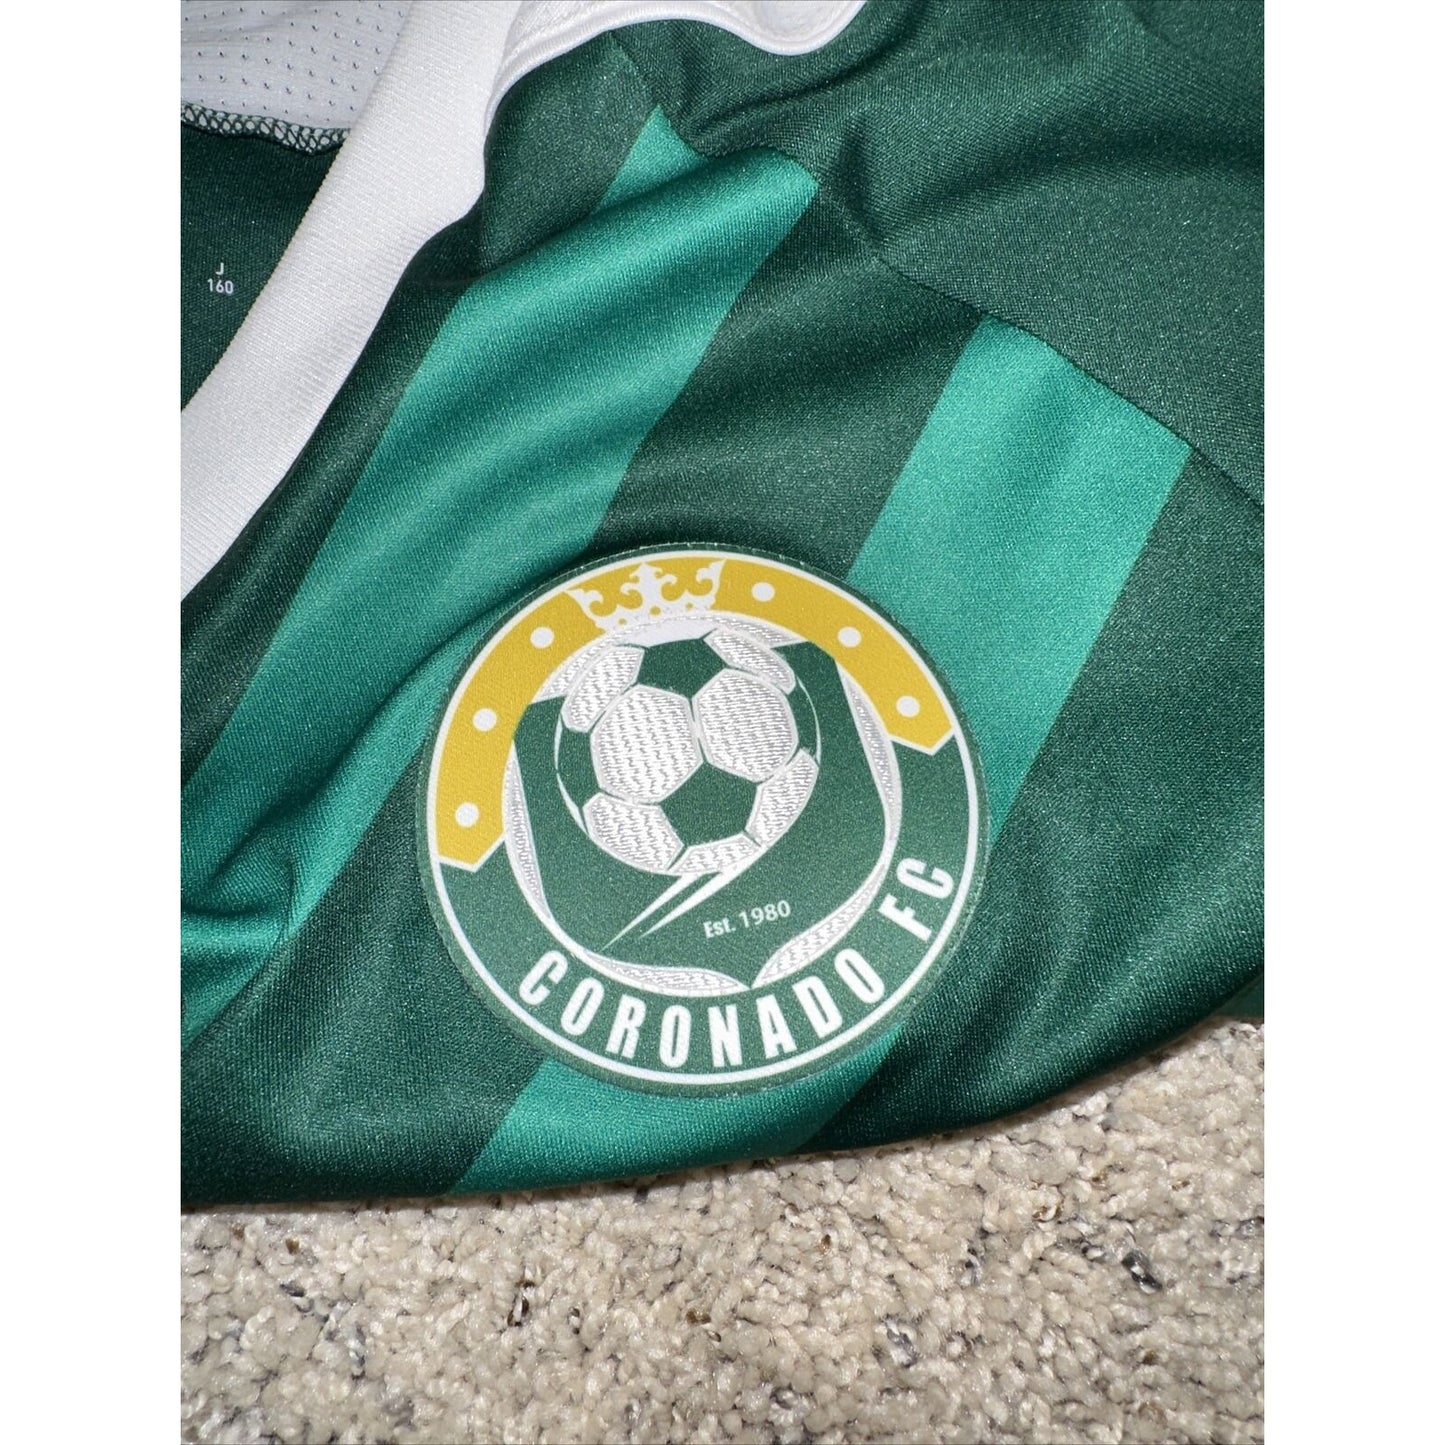 Youth Teen Large Green Adidas Coronado FC Soccer Jersey